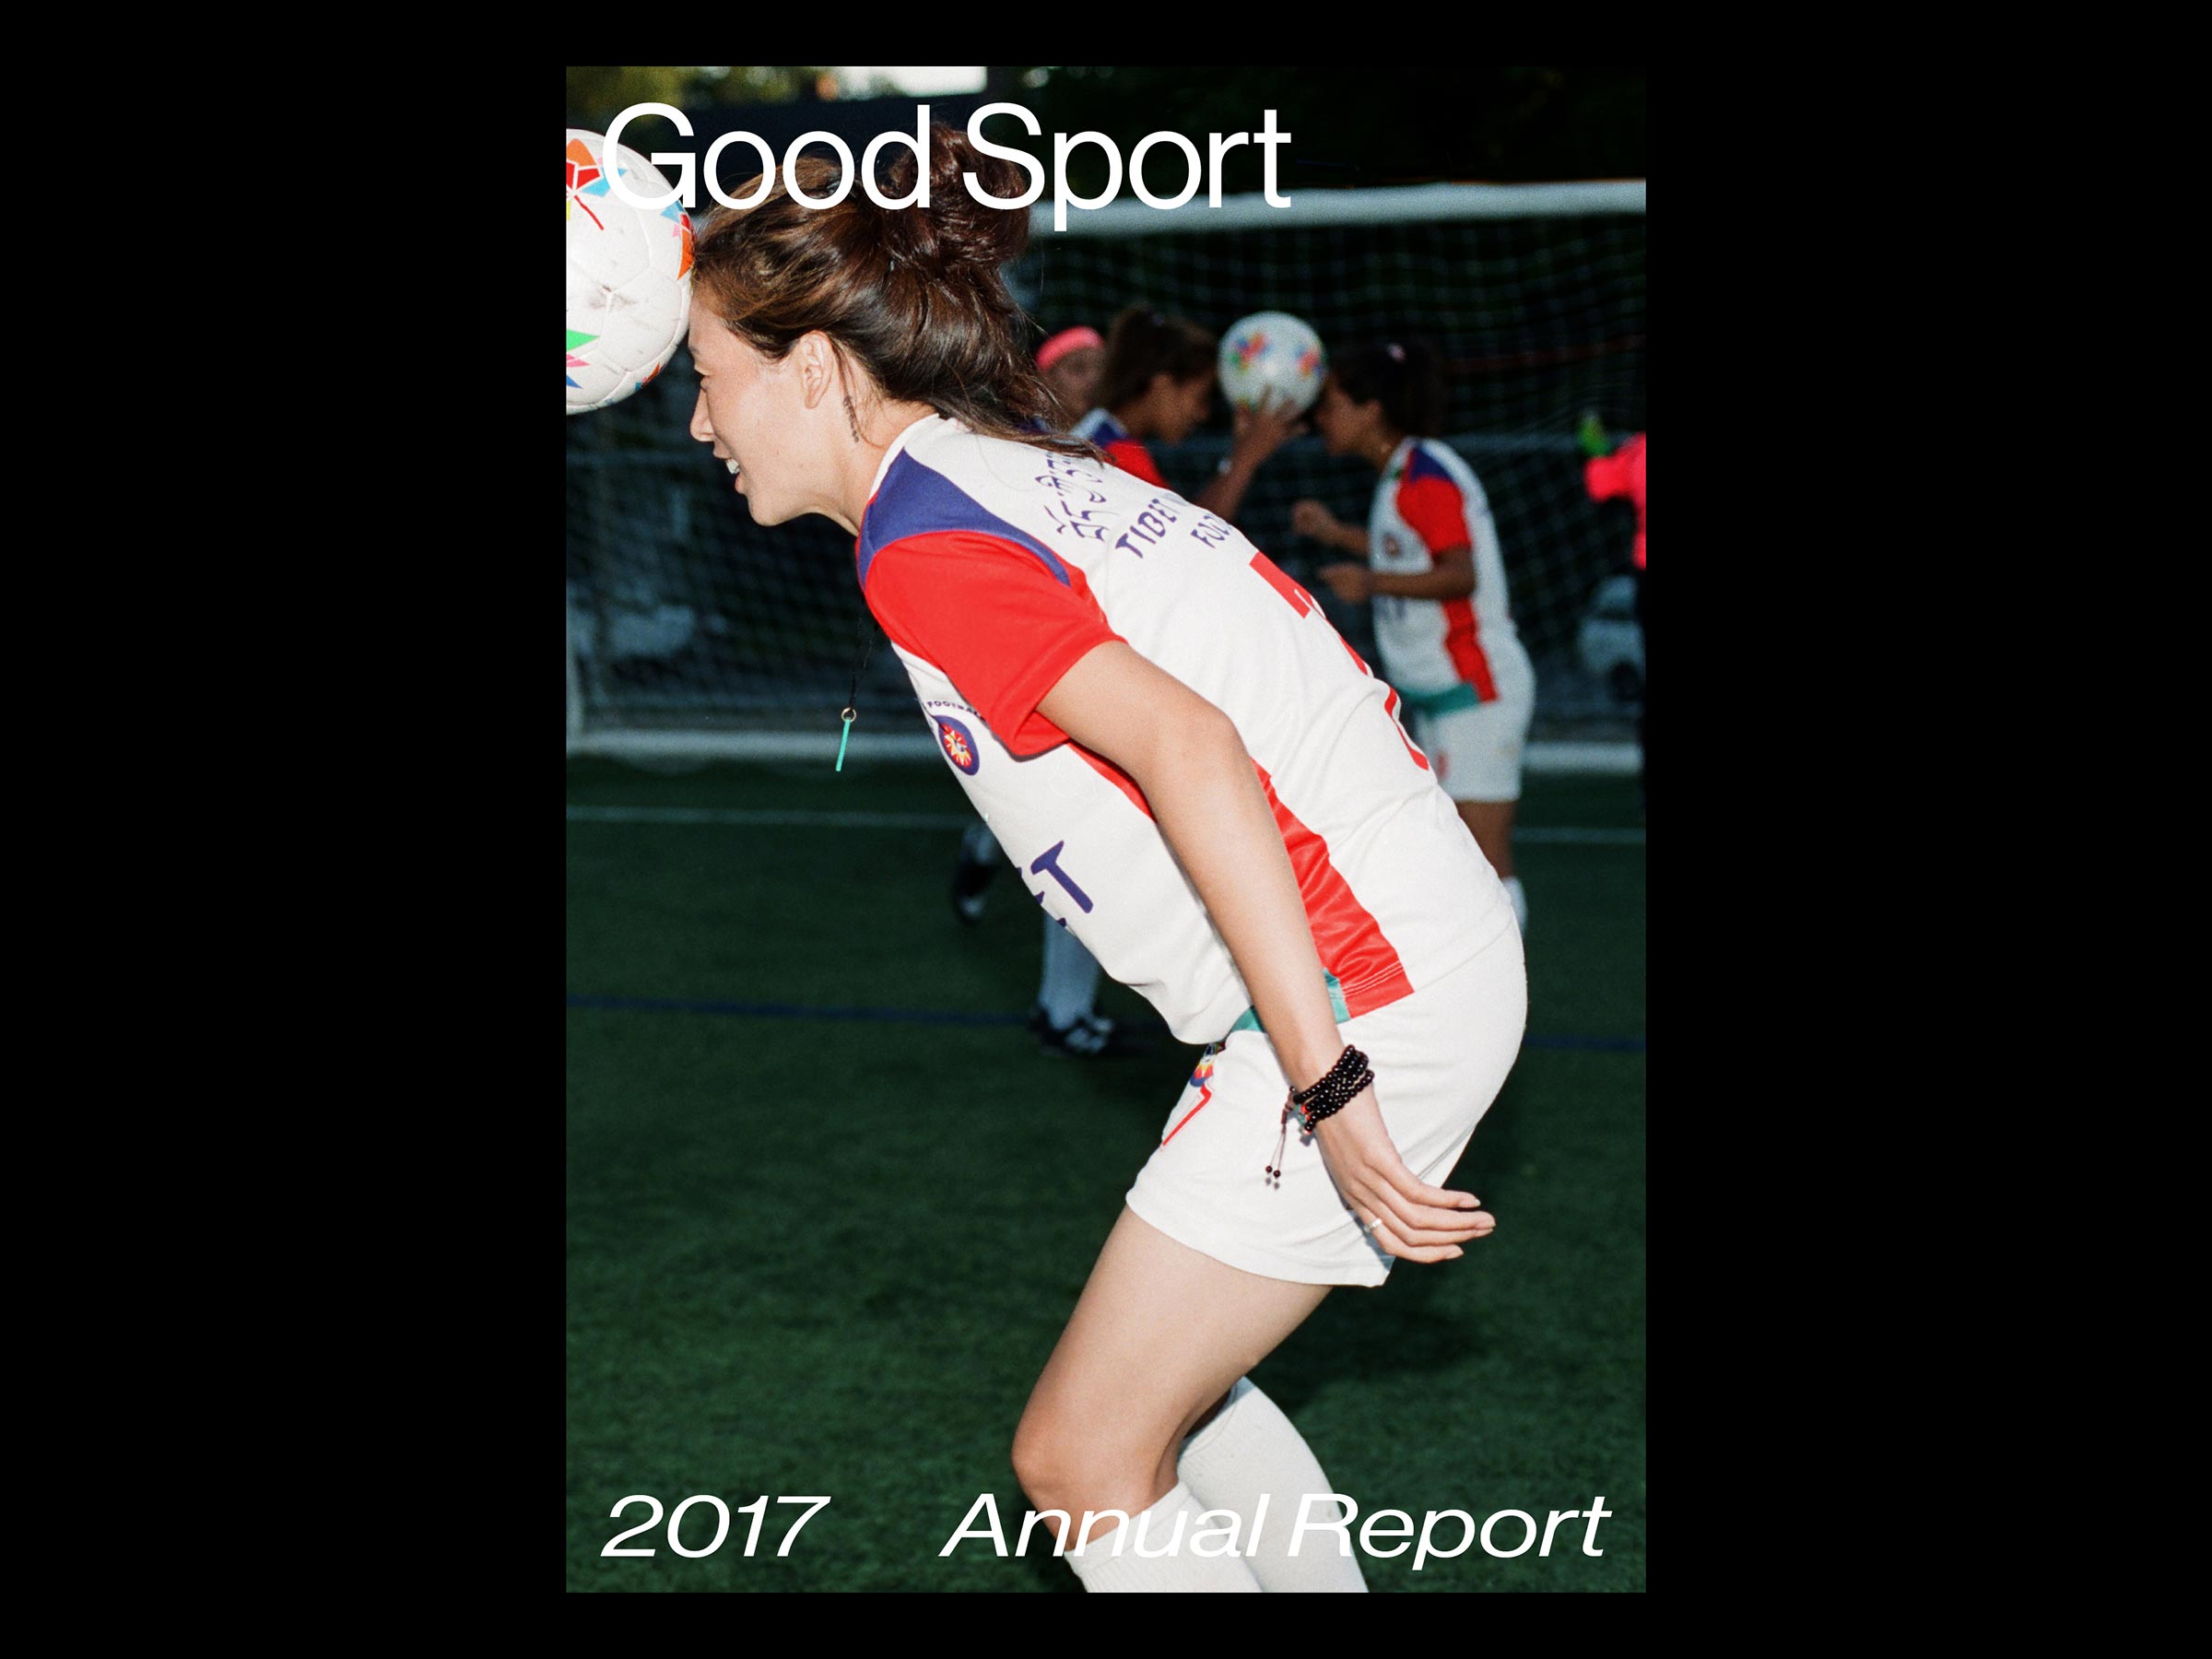 Good Sport Annual Report